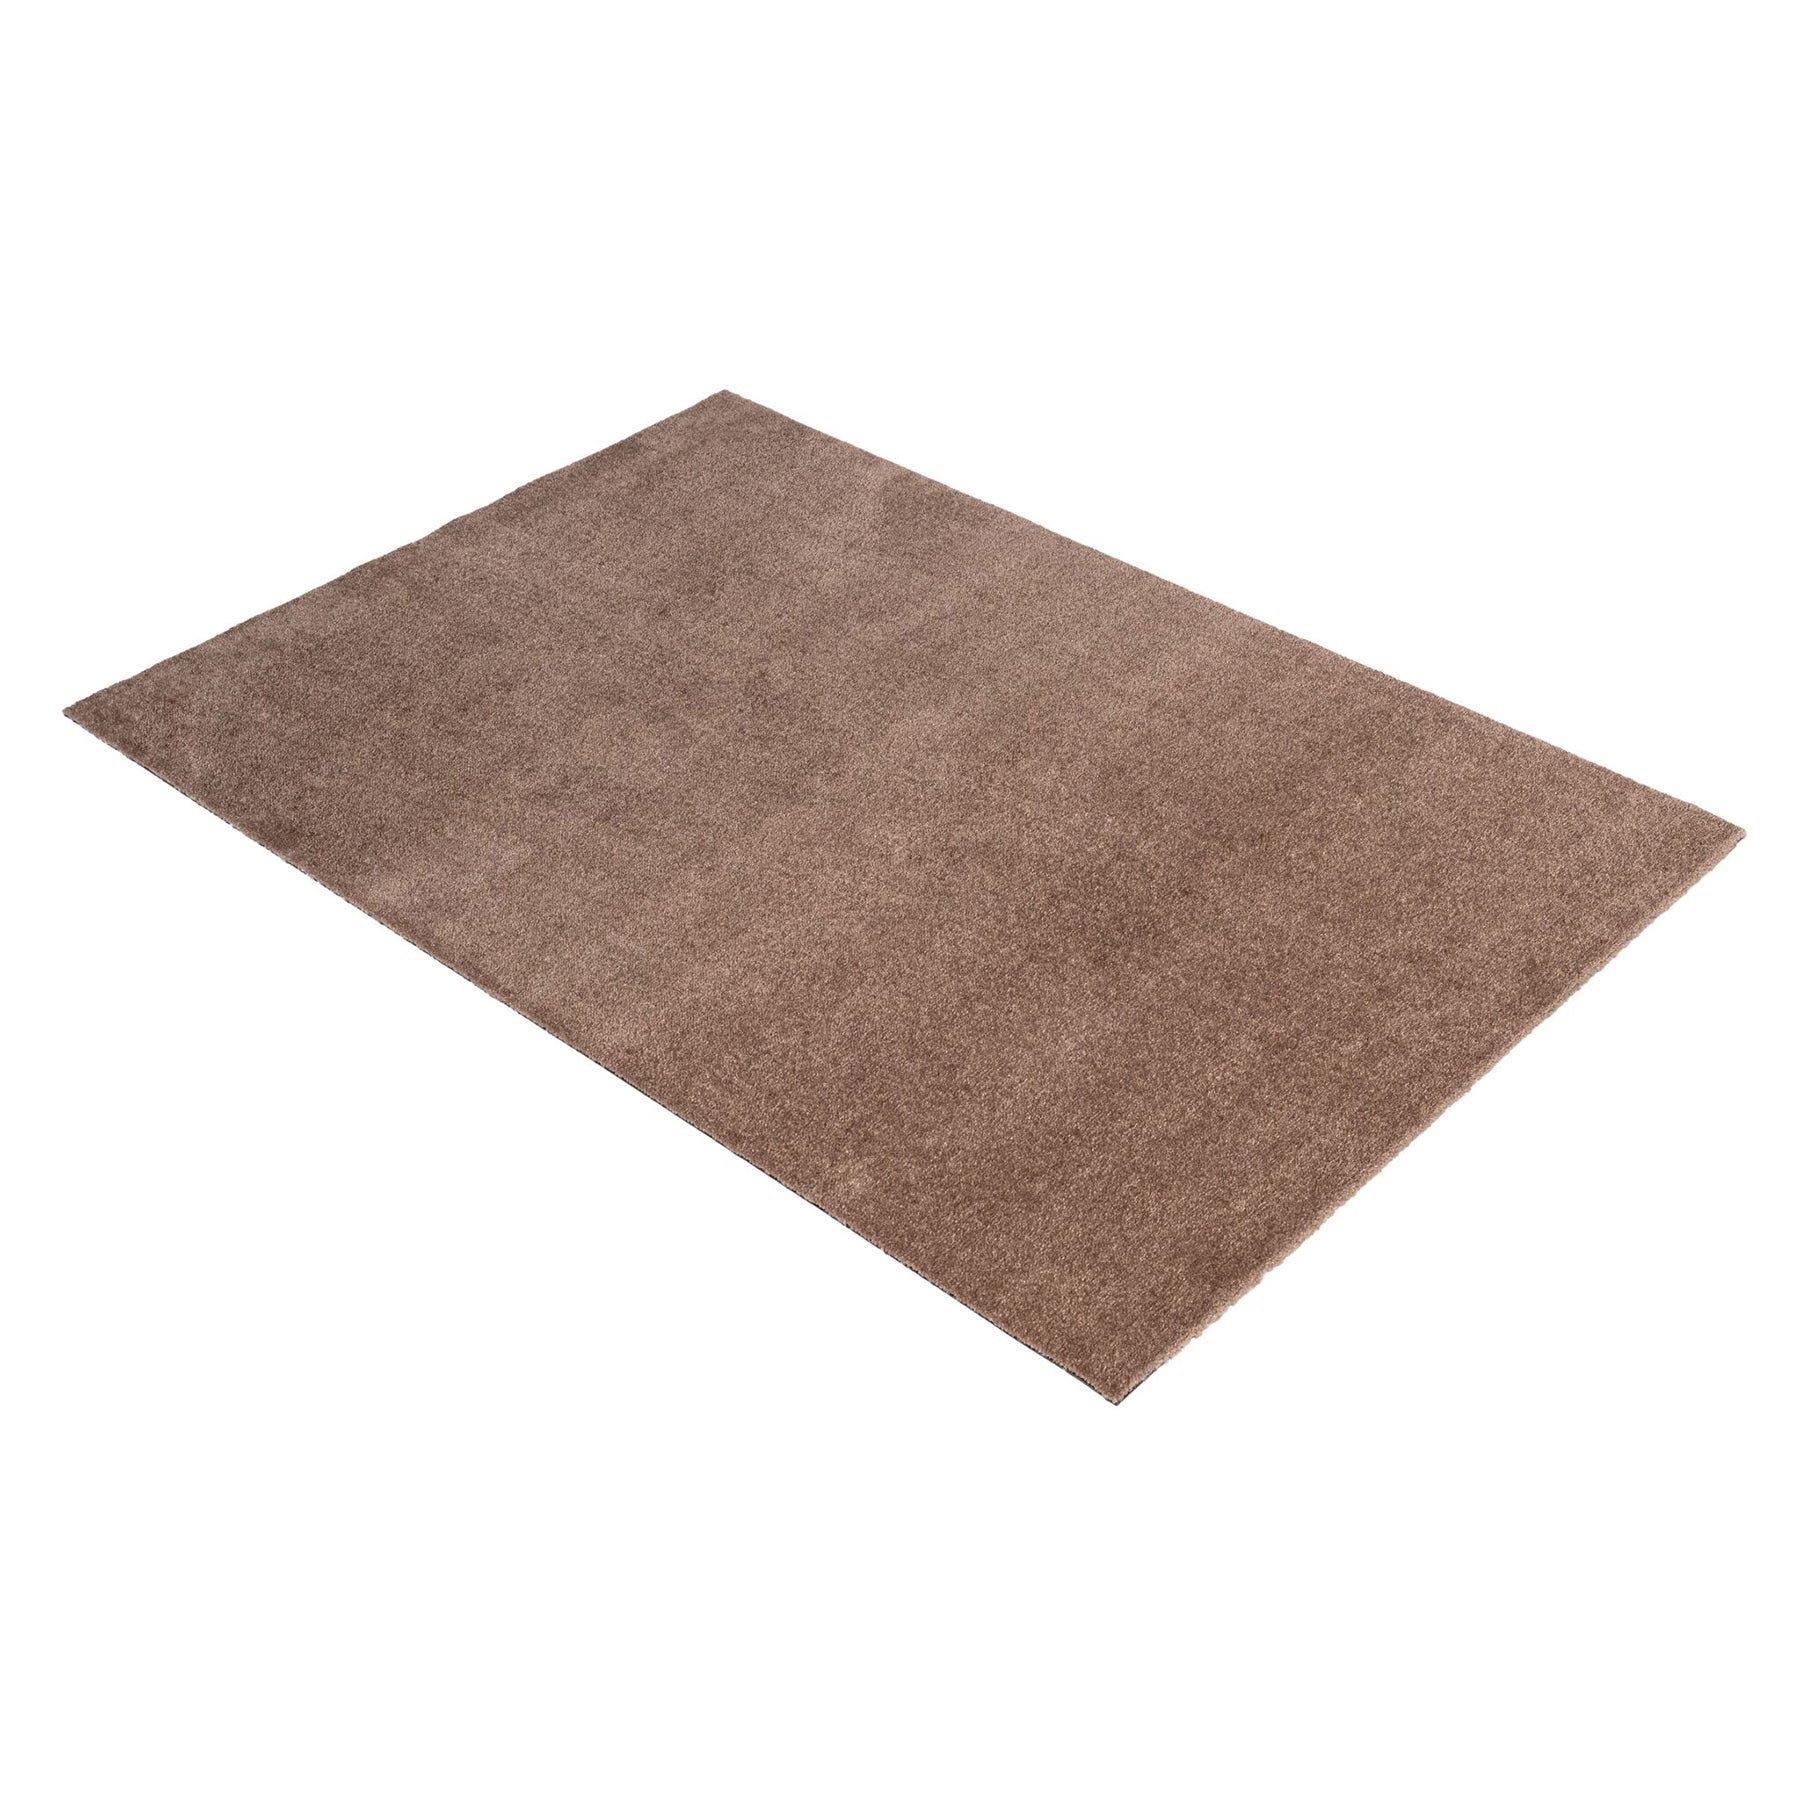 Blanket/had 90 x 130 cm - uni color/sand